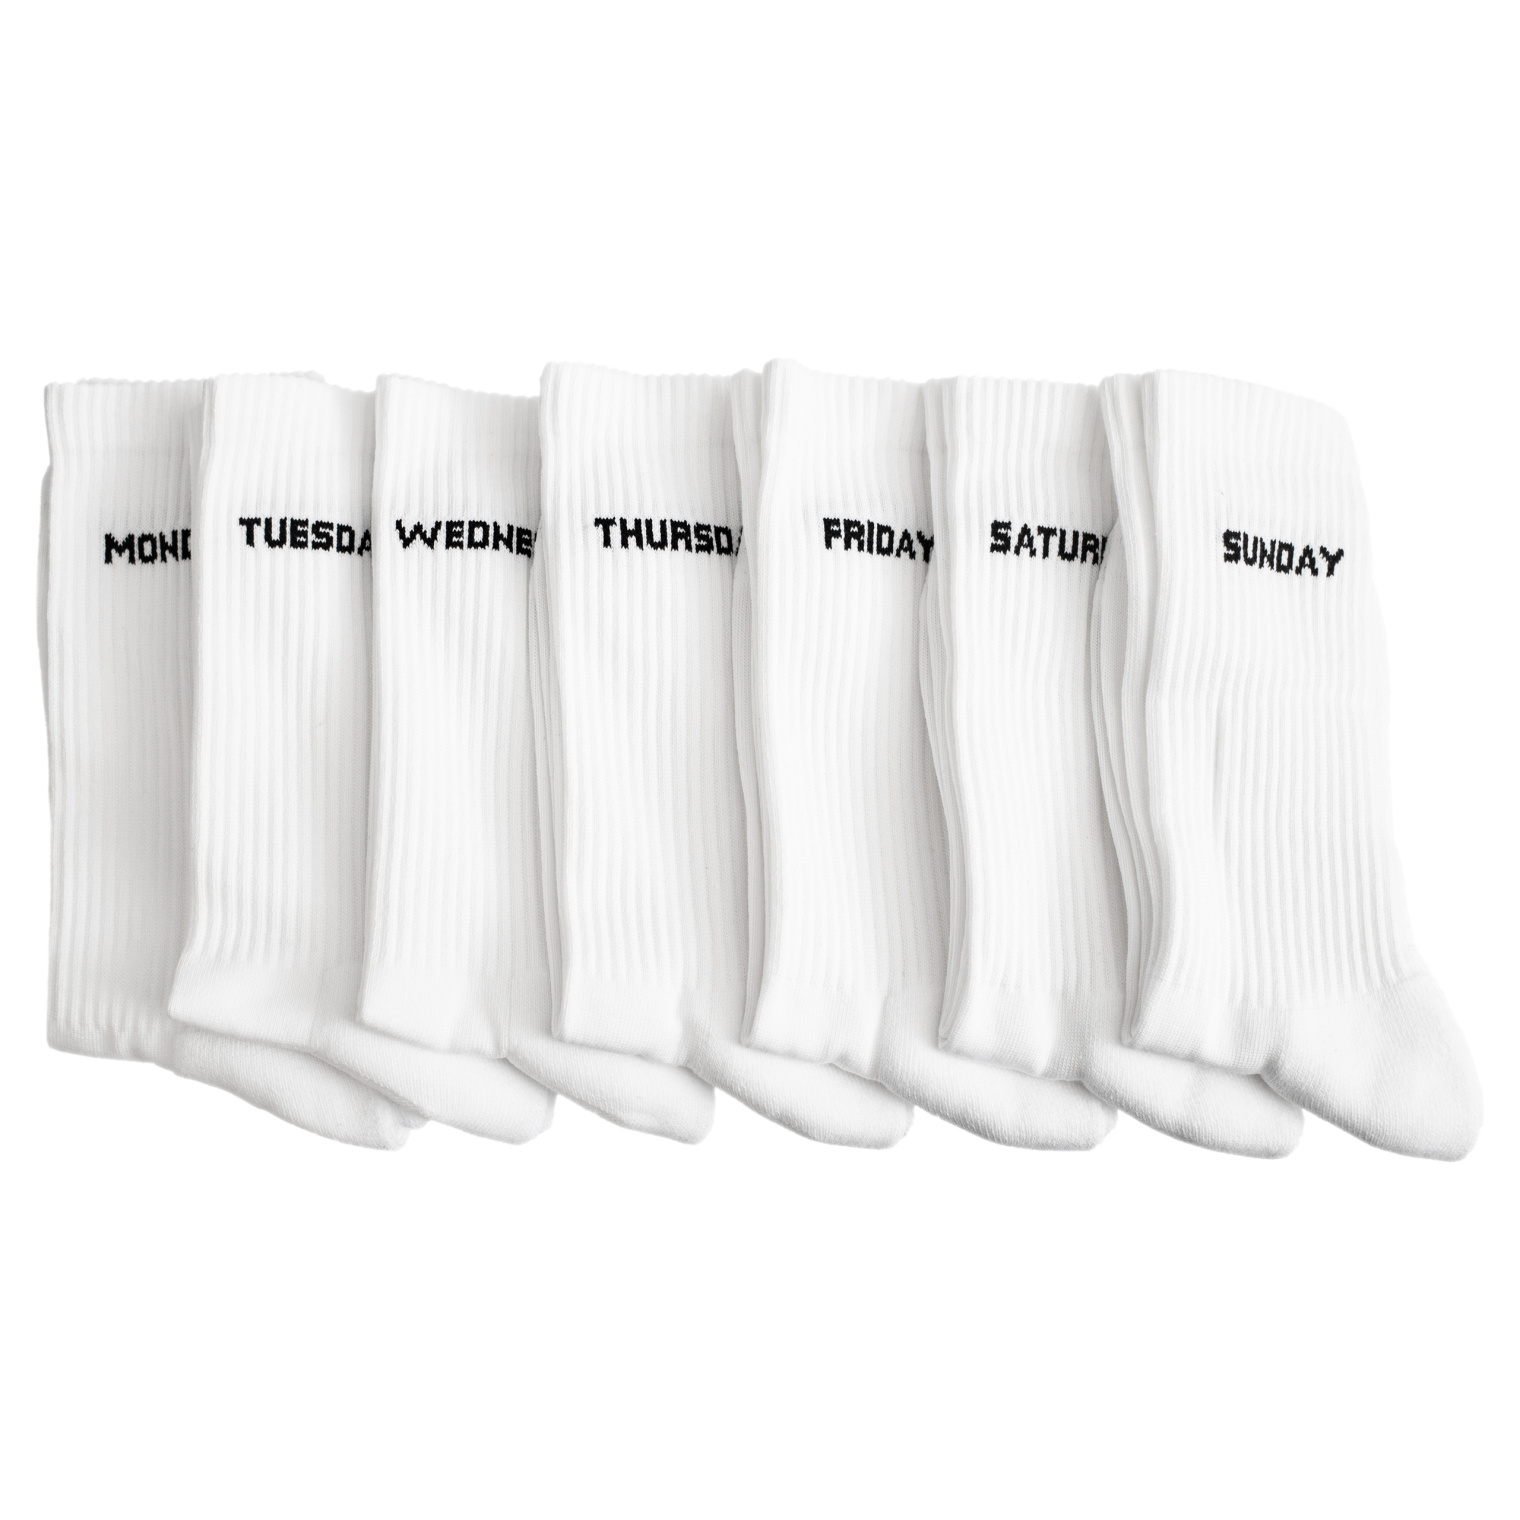 Balenciaga 7 Days Socks Pack in white